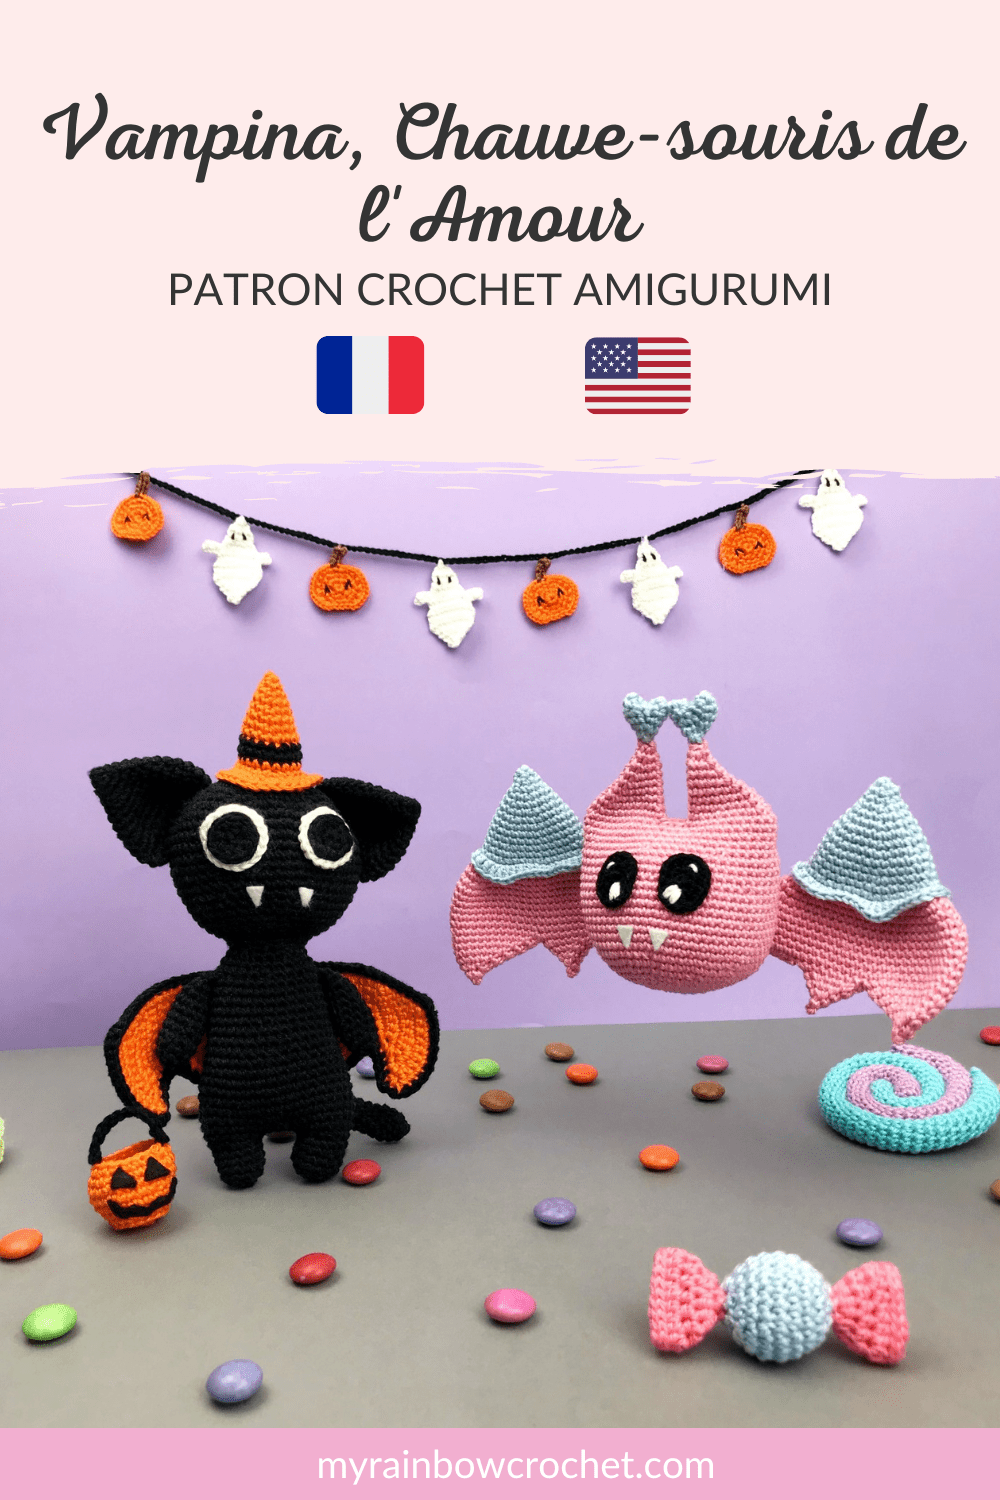 patron crochet vampina chauve-souris amour halloween